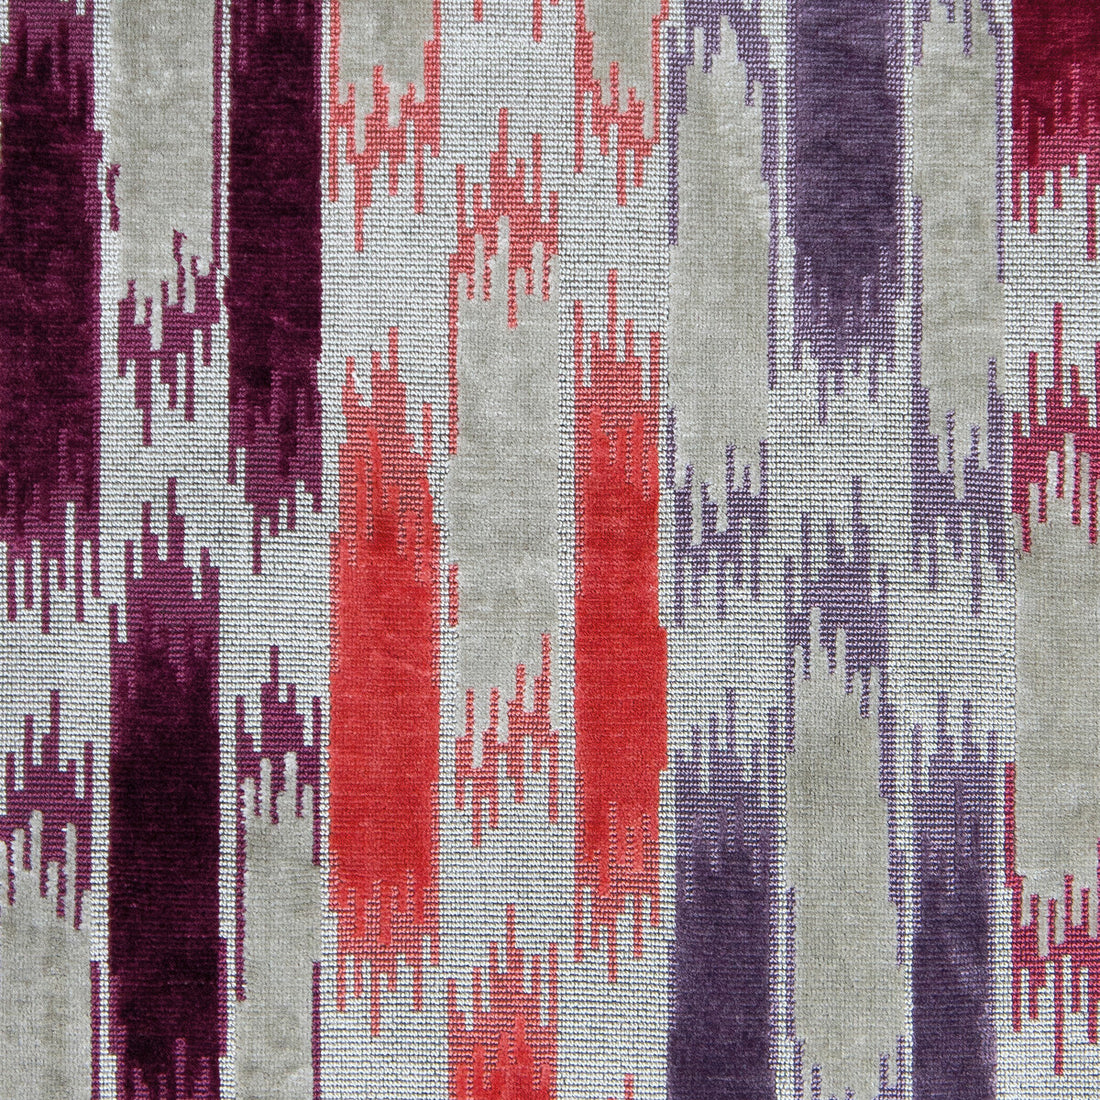 Aragon fabric in gris/purple color - pattern GDT5566.004.0 - by Gaston y Daniela in the Gaston Nuevo Mundo collection